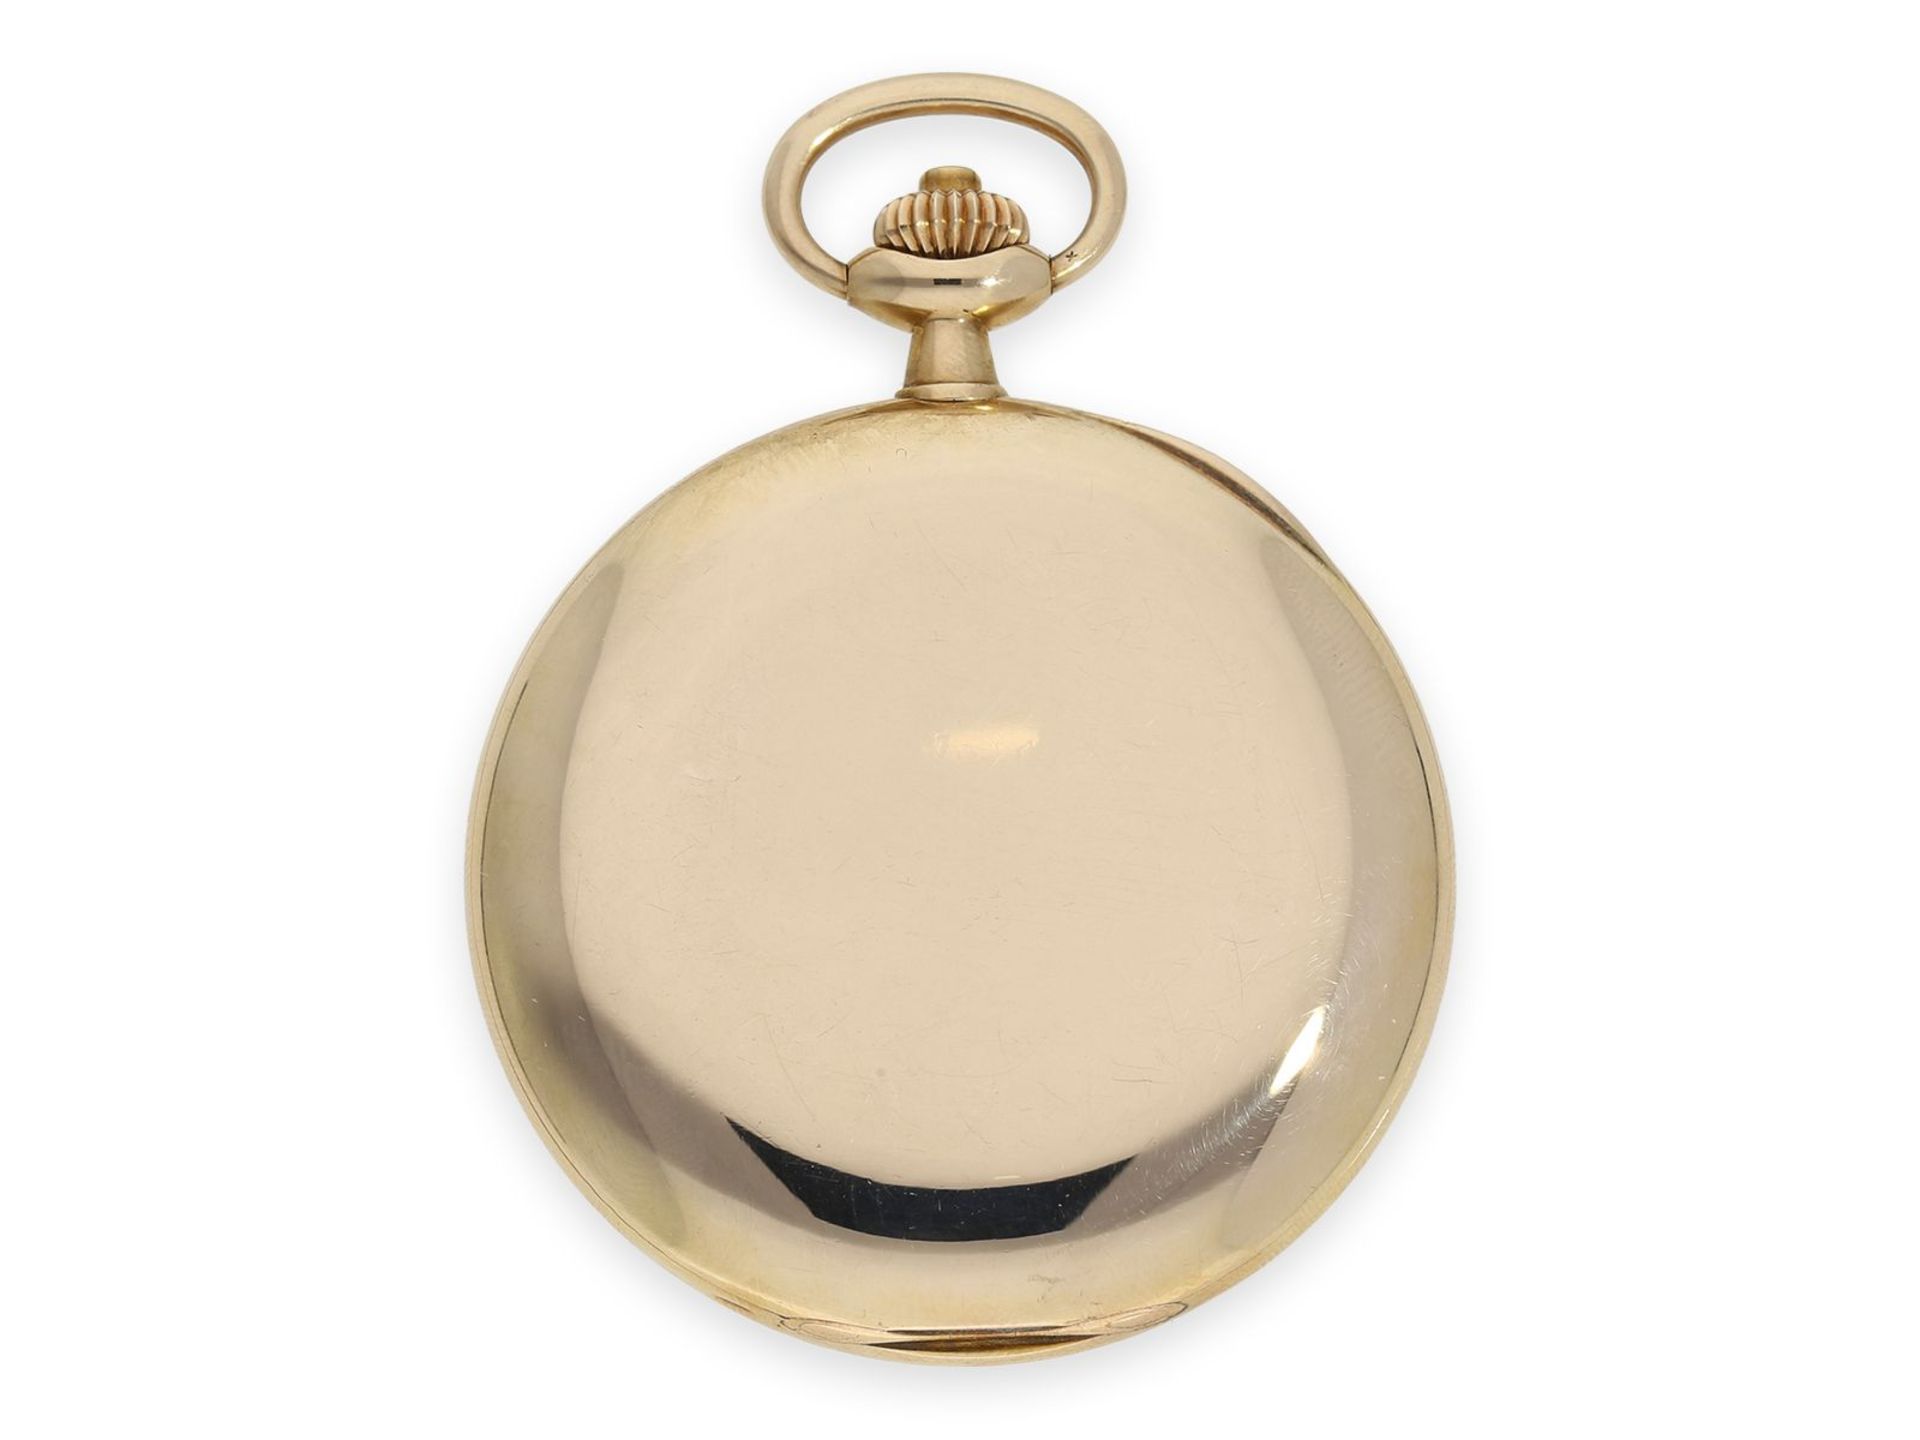 Taschenuhr: qualitätsvolle Goldsavonnette der Marke Longines, Ankerchronometer Kaliber 19.80, ca. - Image 7 of 7